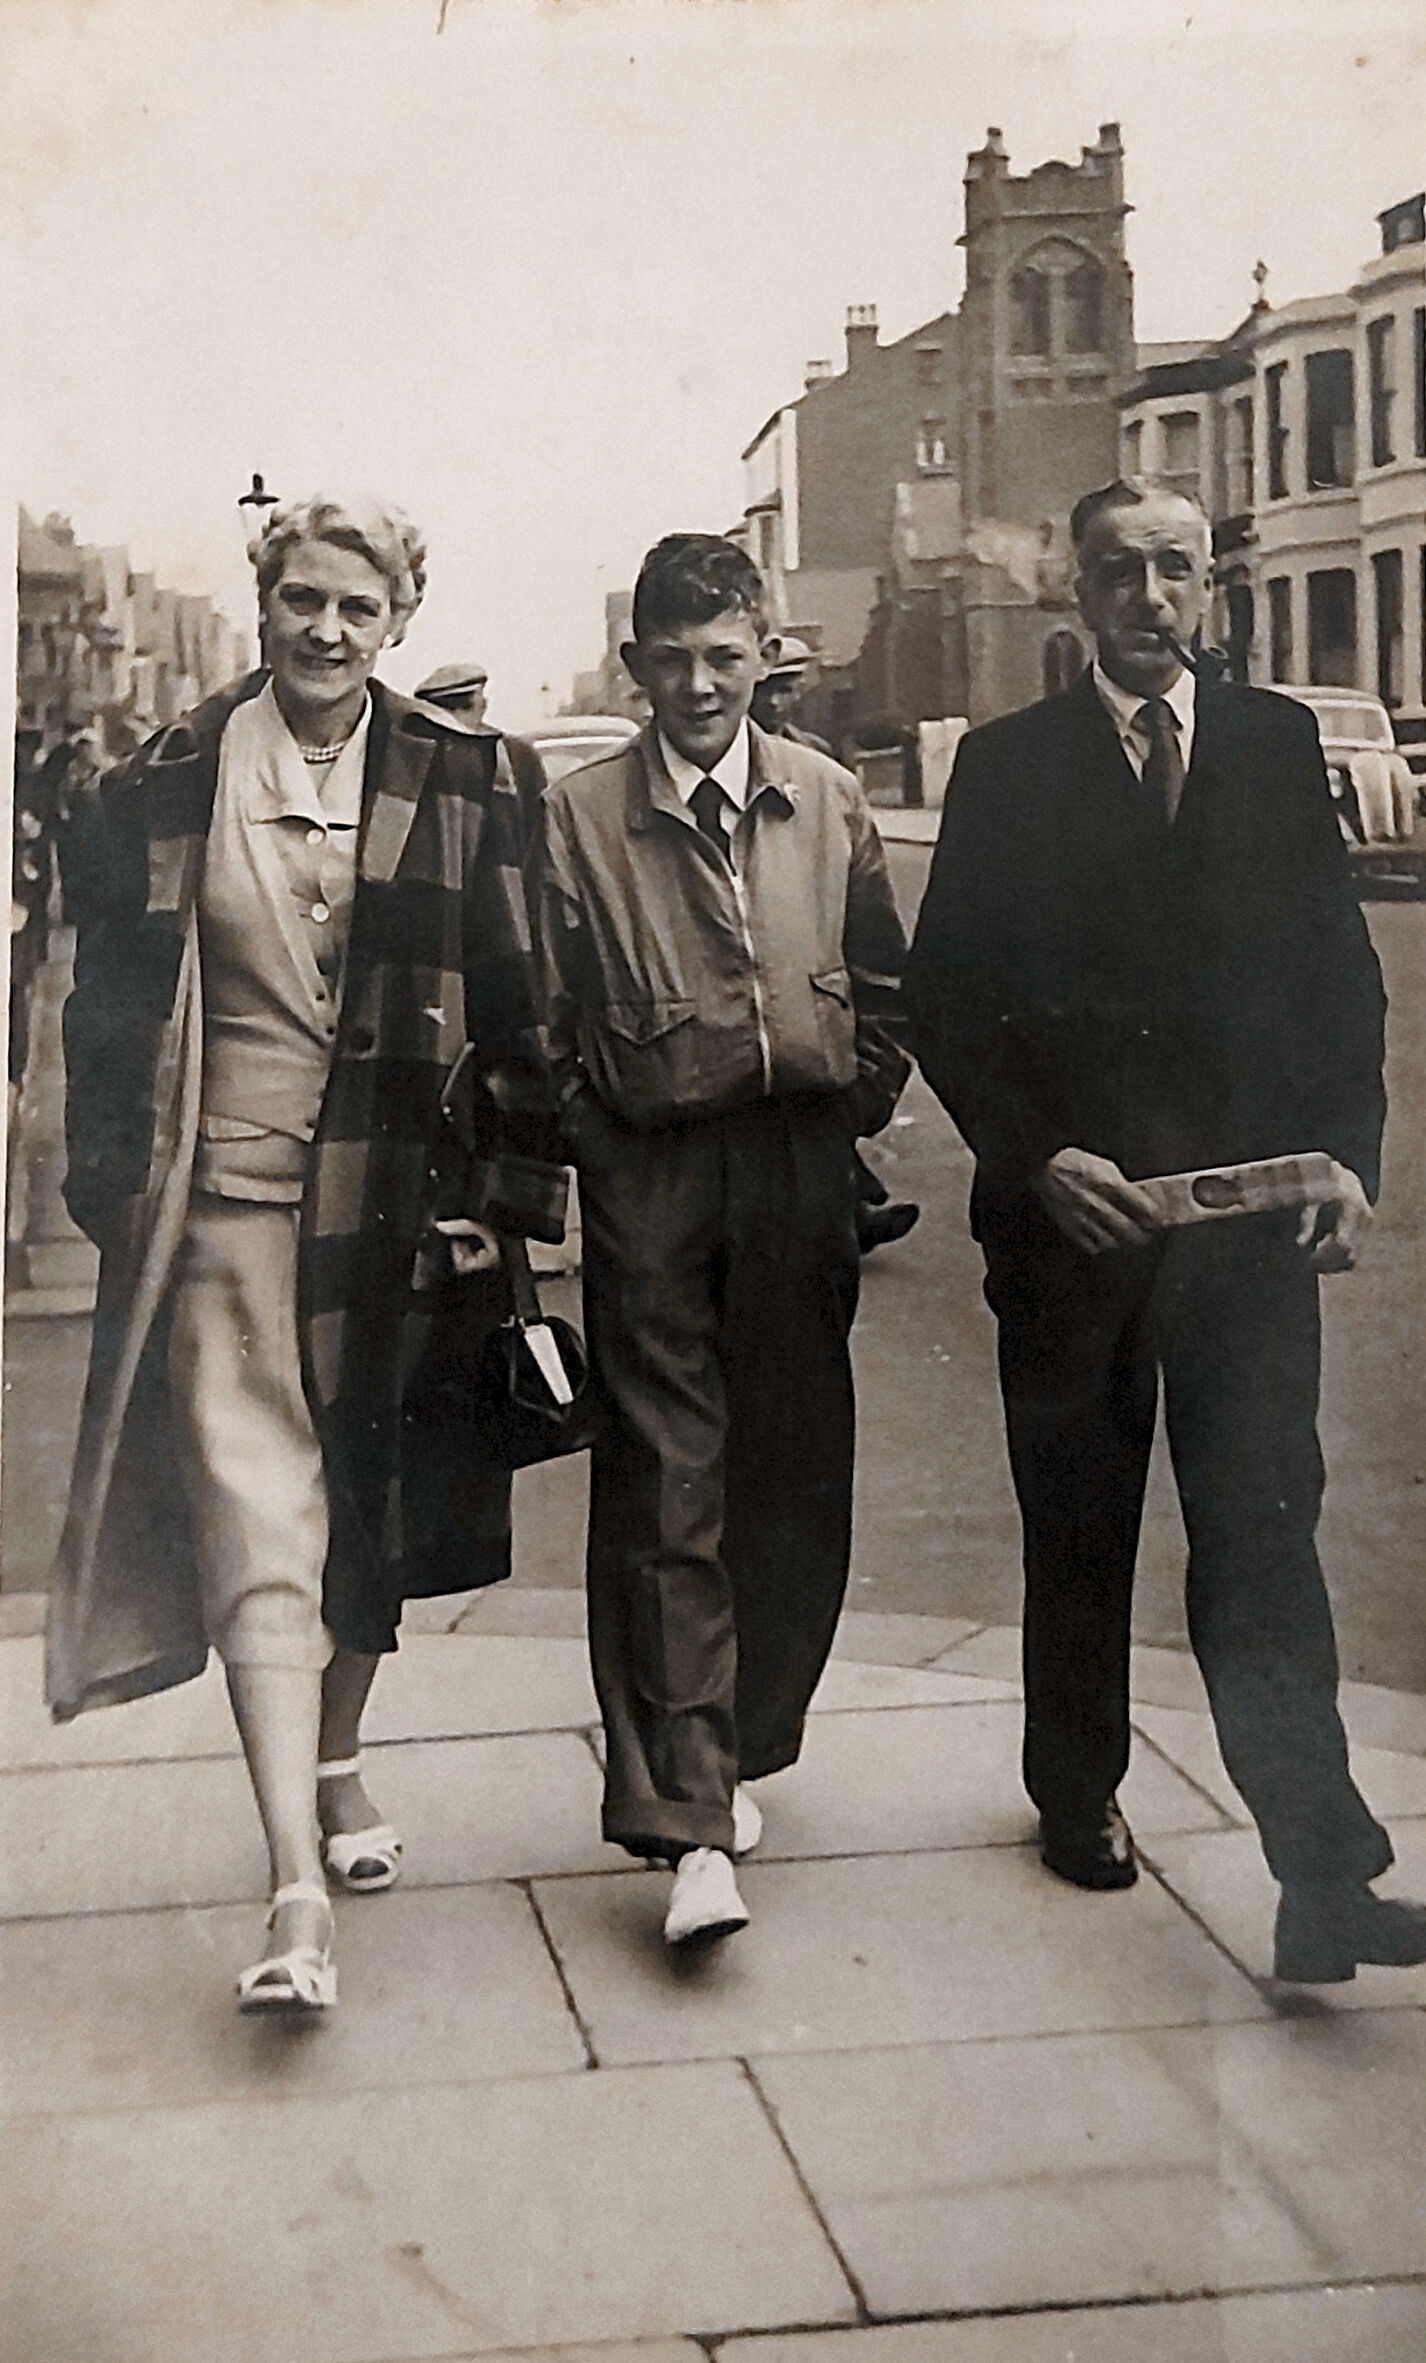 Grandma Shaw, Dad, Grandad Shaw
Approx 1948, Blackpool.